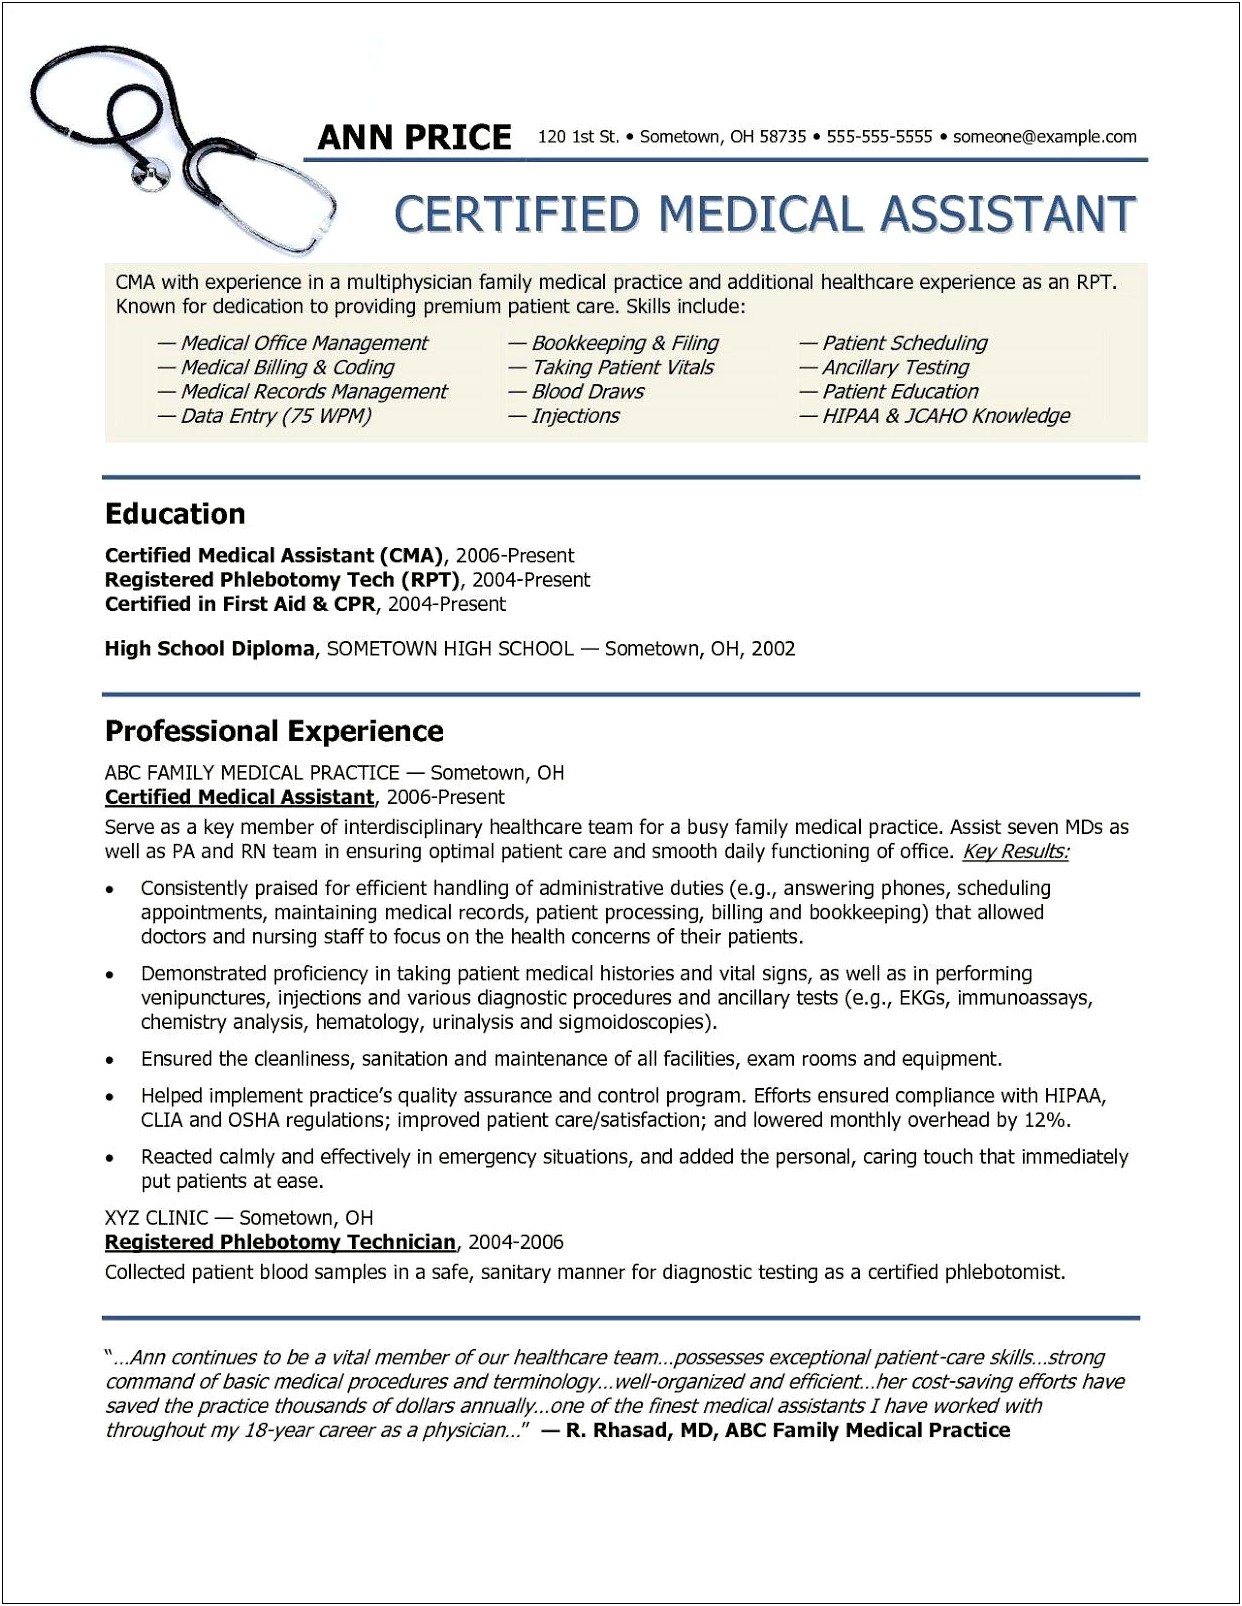 Resume Objectives For Entry Level Medical Assistant